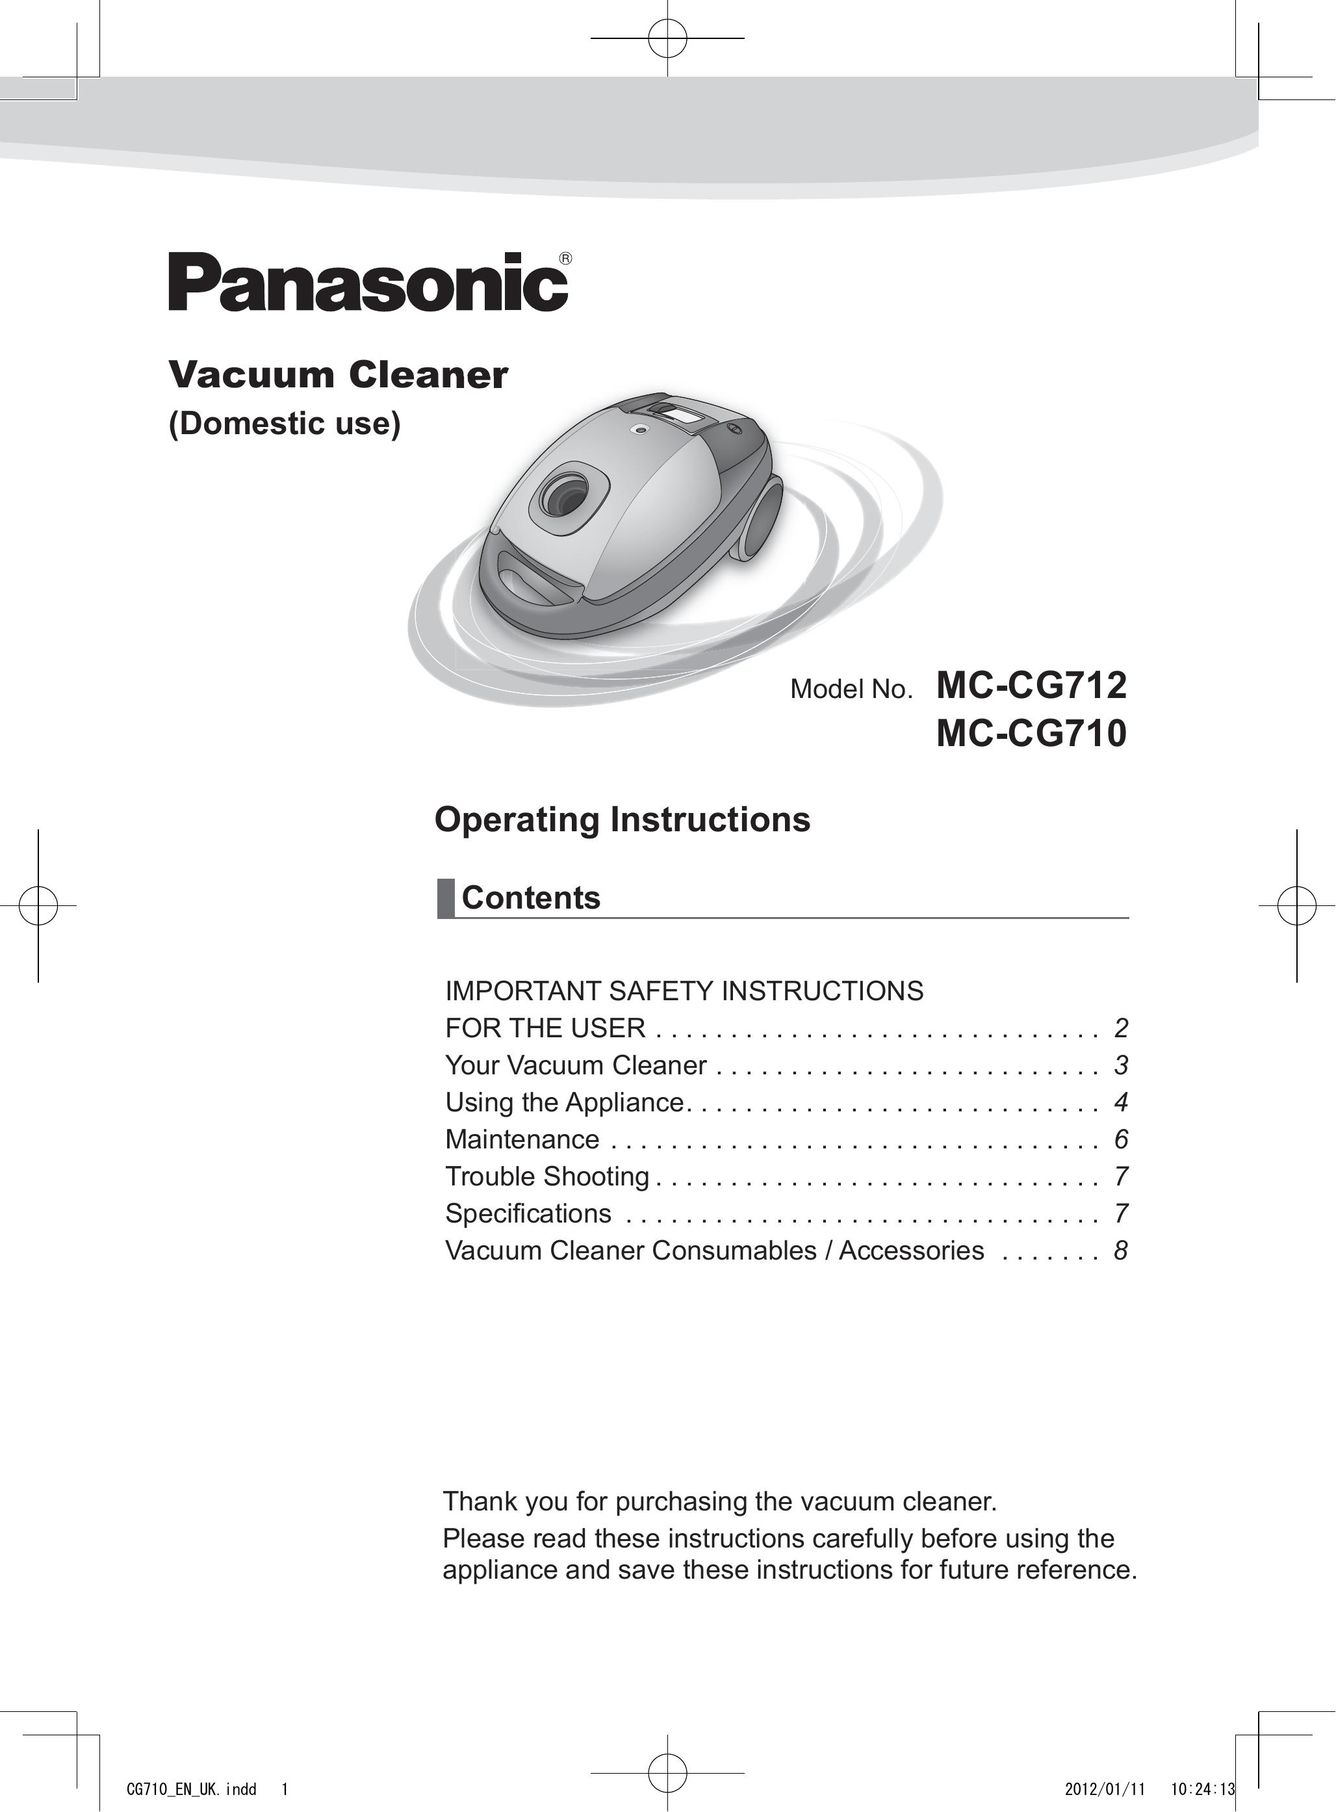 Panasonic MC-CG712 Vacuum Cleaner User Manual